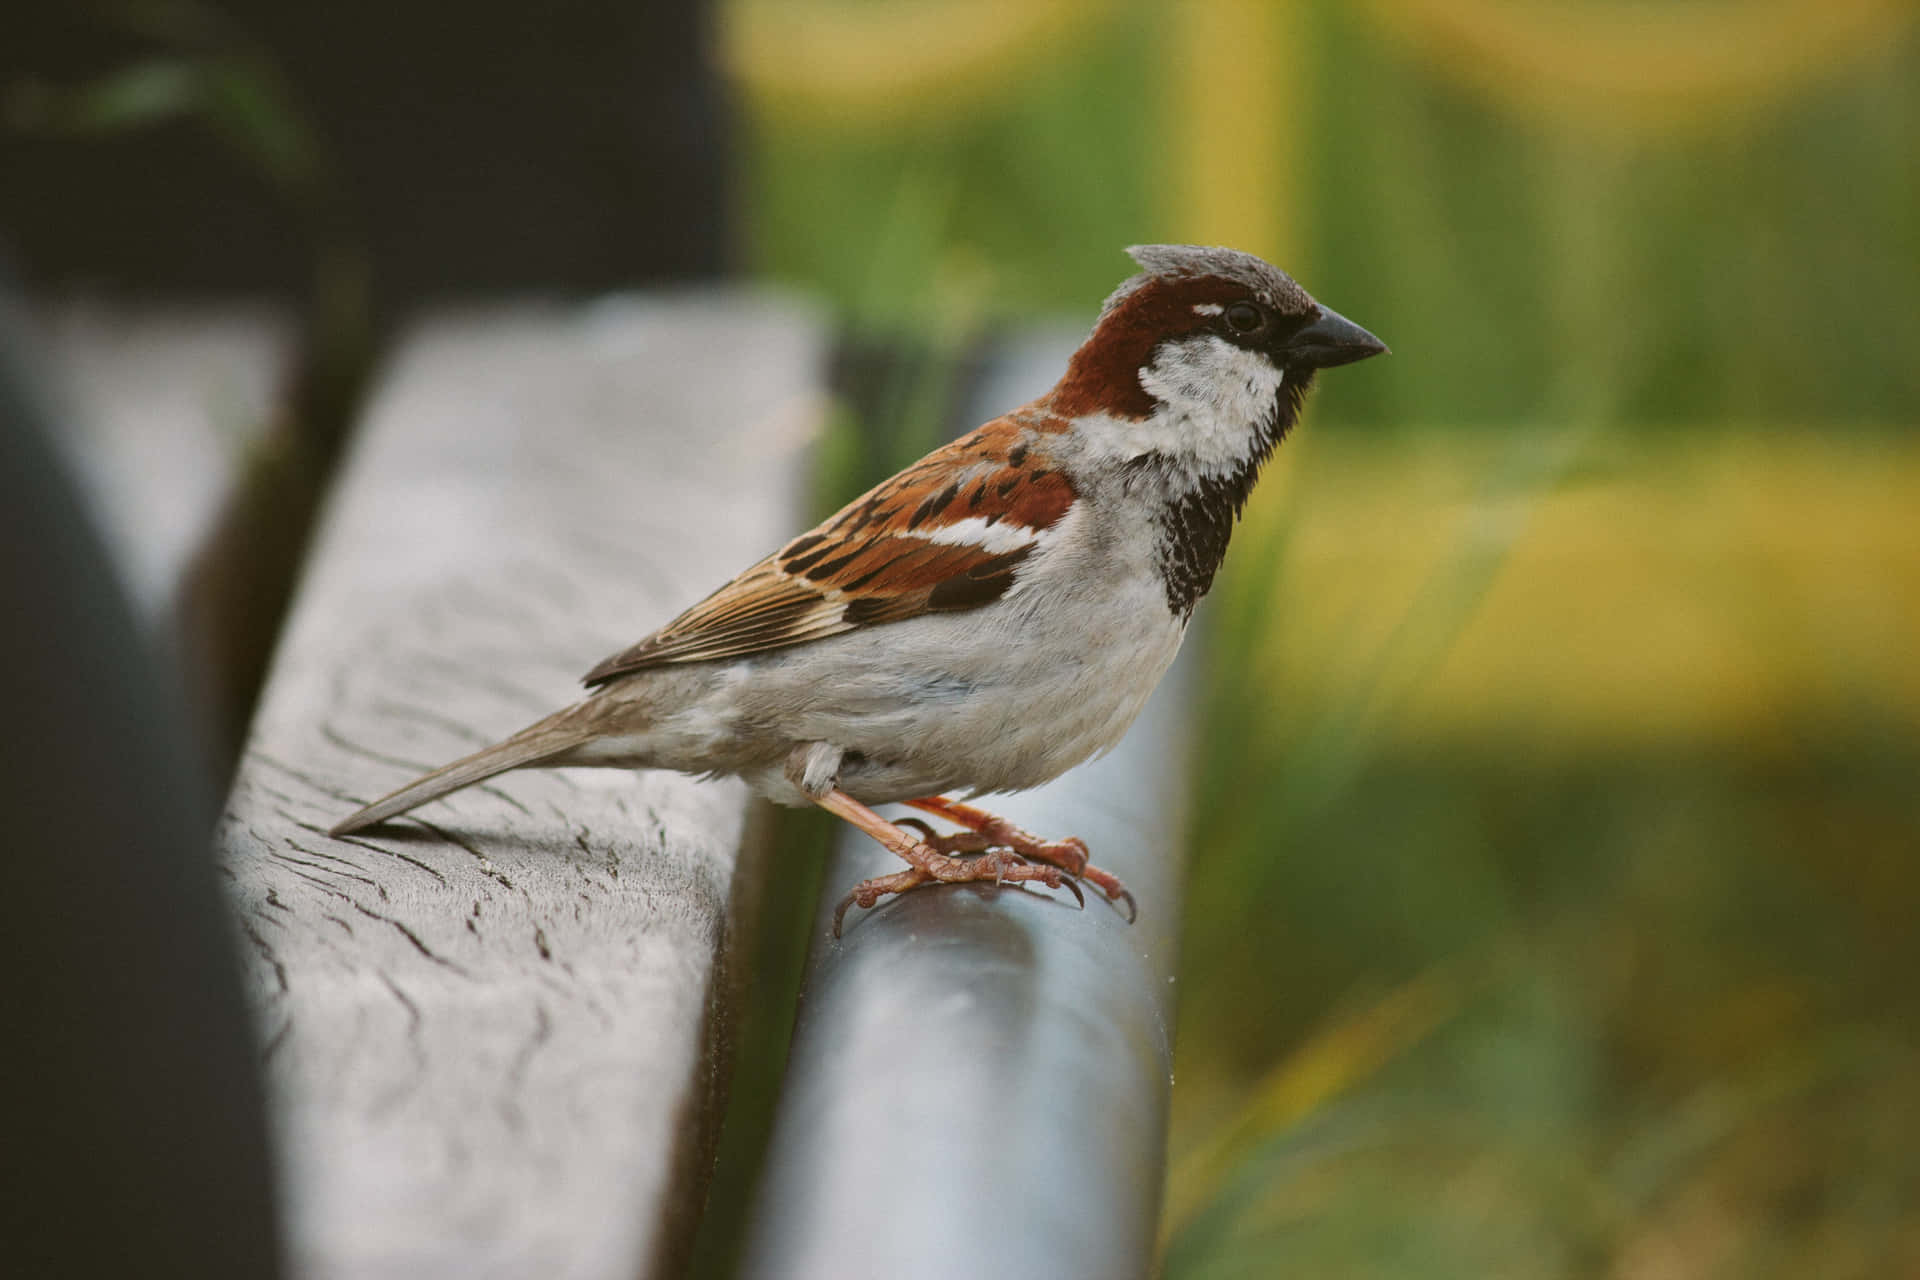 A small sparrow enjoying a sunny day